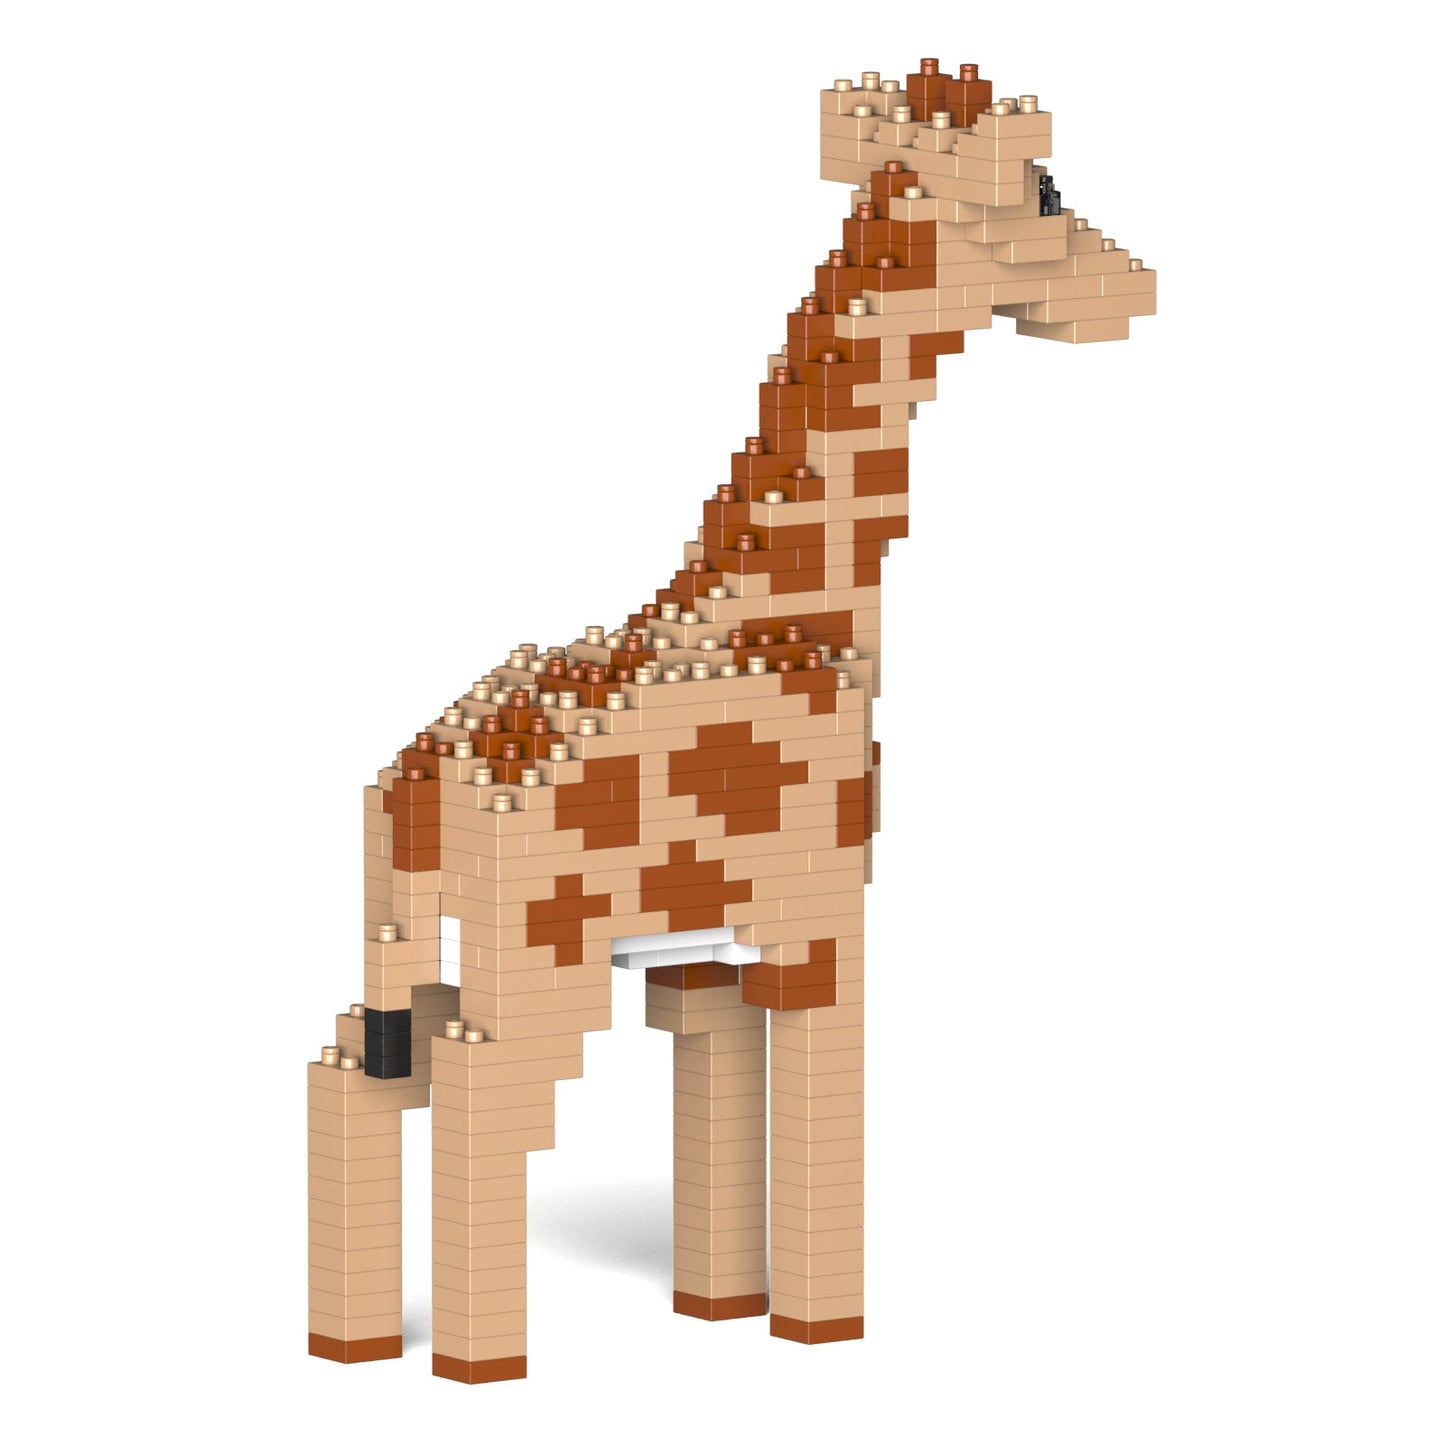 Giraffe 02